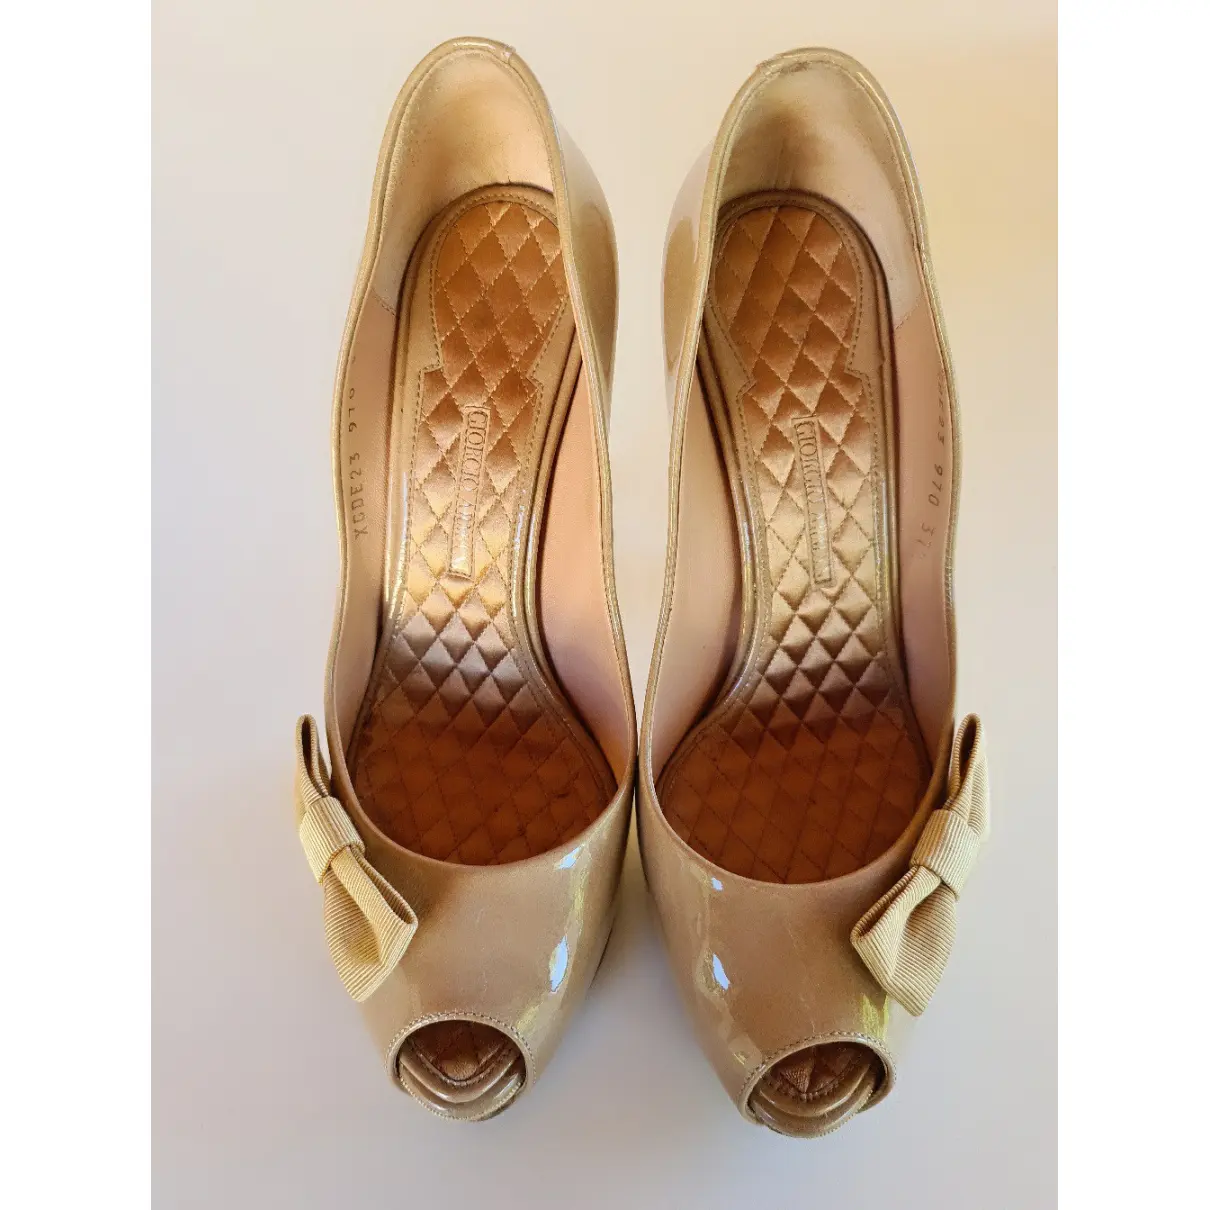 Buy Giorgio Armani Patent leather heels online